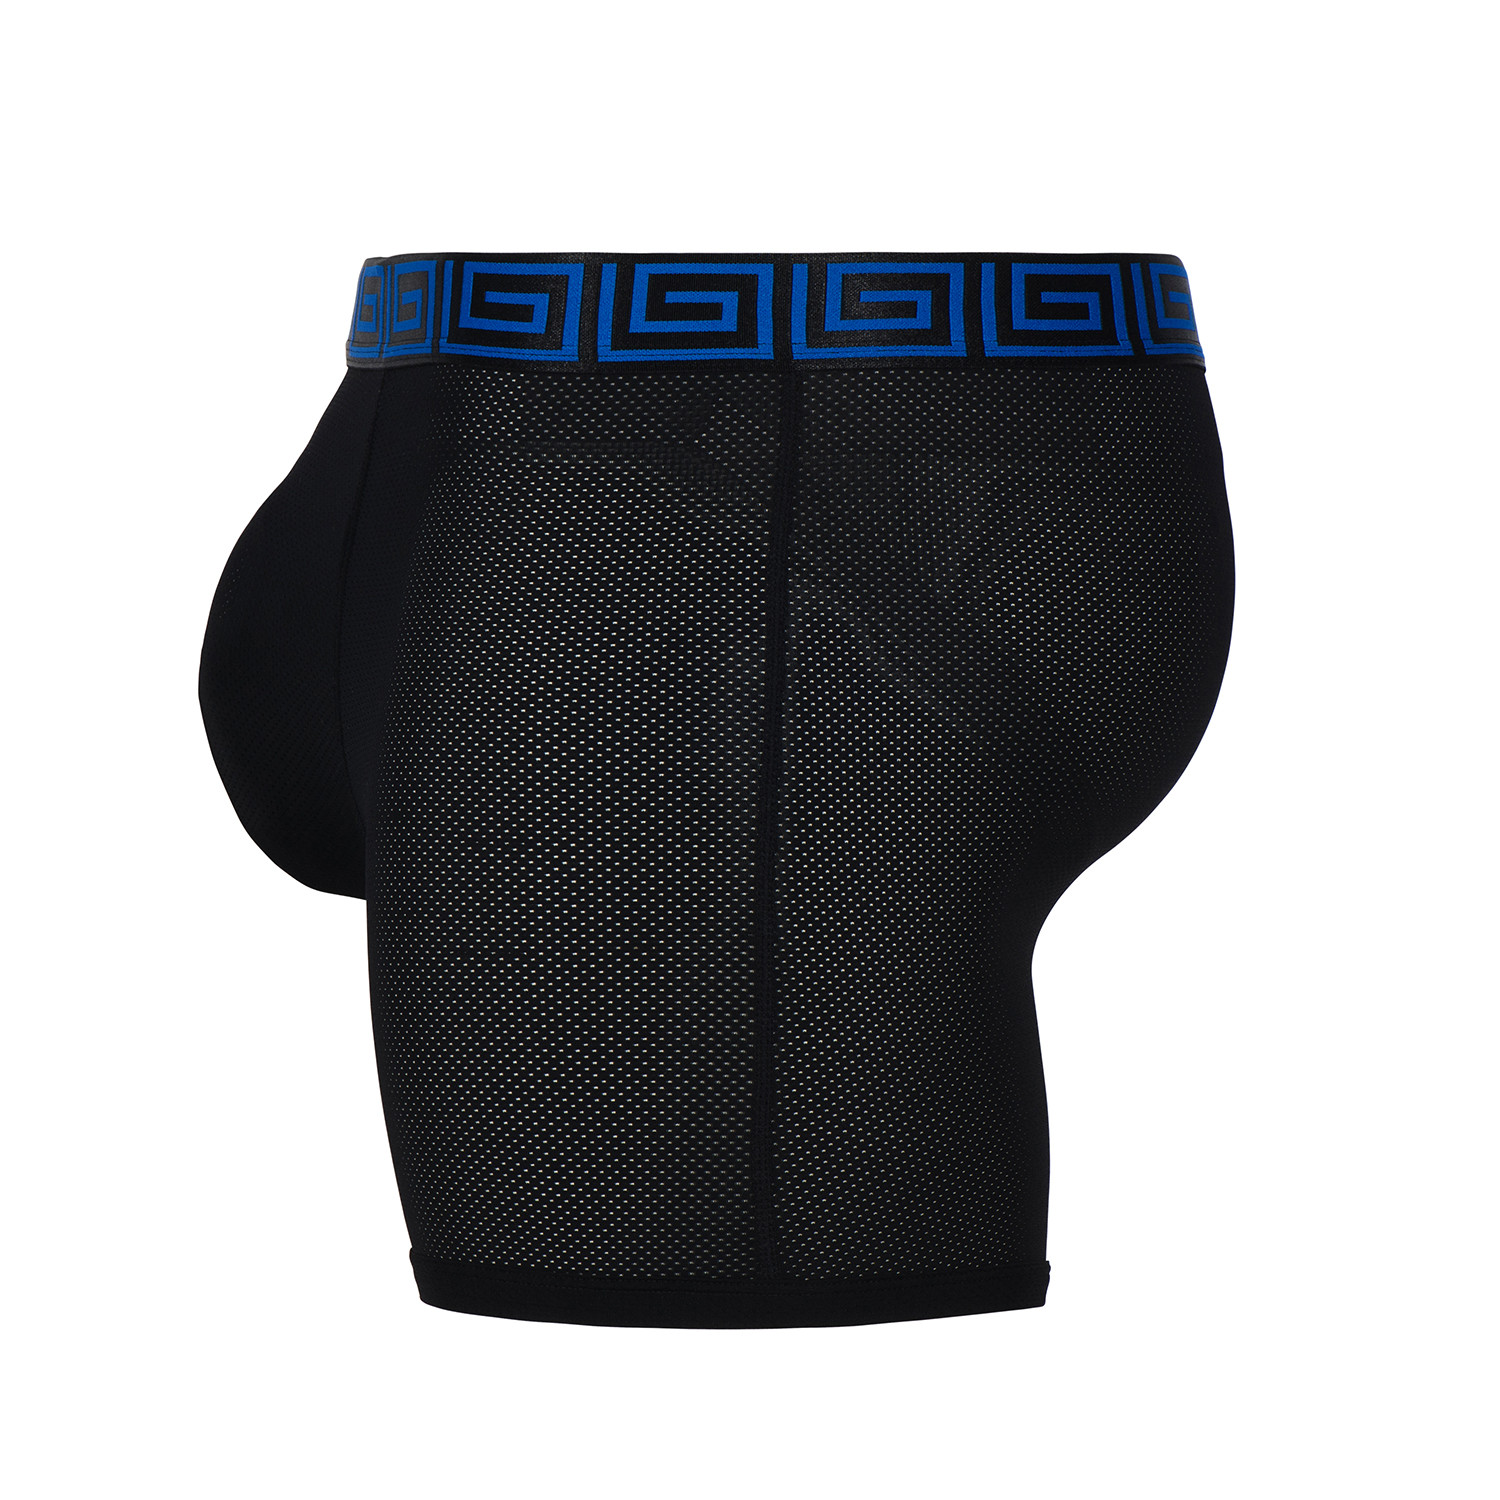 SHEATH 4.0 AirFlow Mesh Men's Dual Pouch Boxer Brief // Blue + Black  (Medium) - Sheath Dual-pouch Boxer Briefs - Touch of Modern